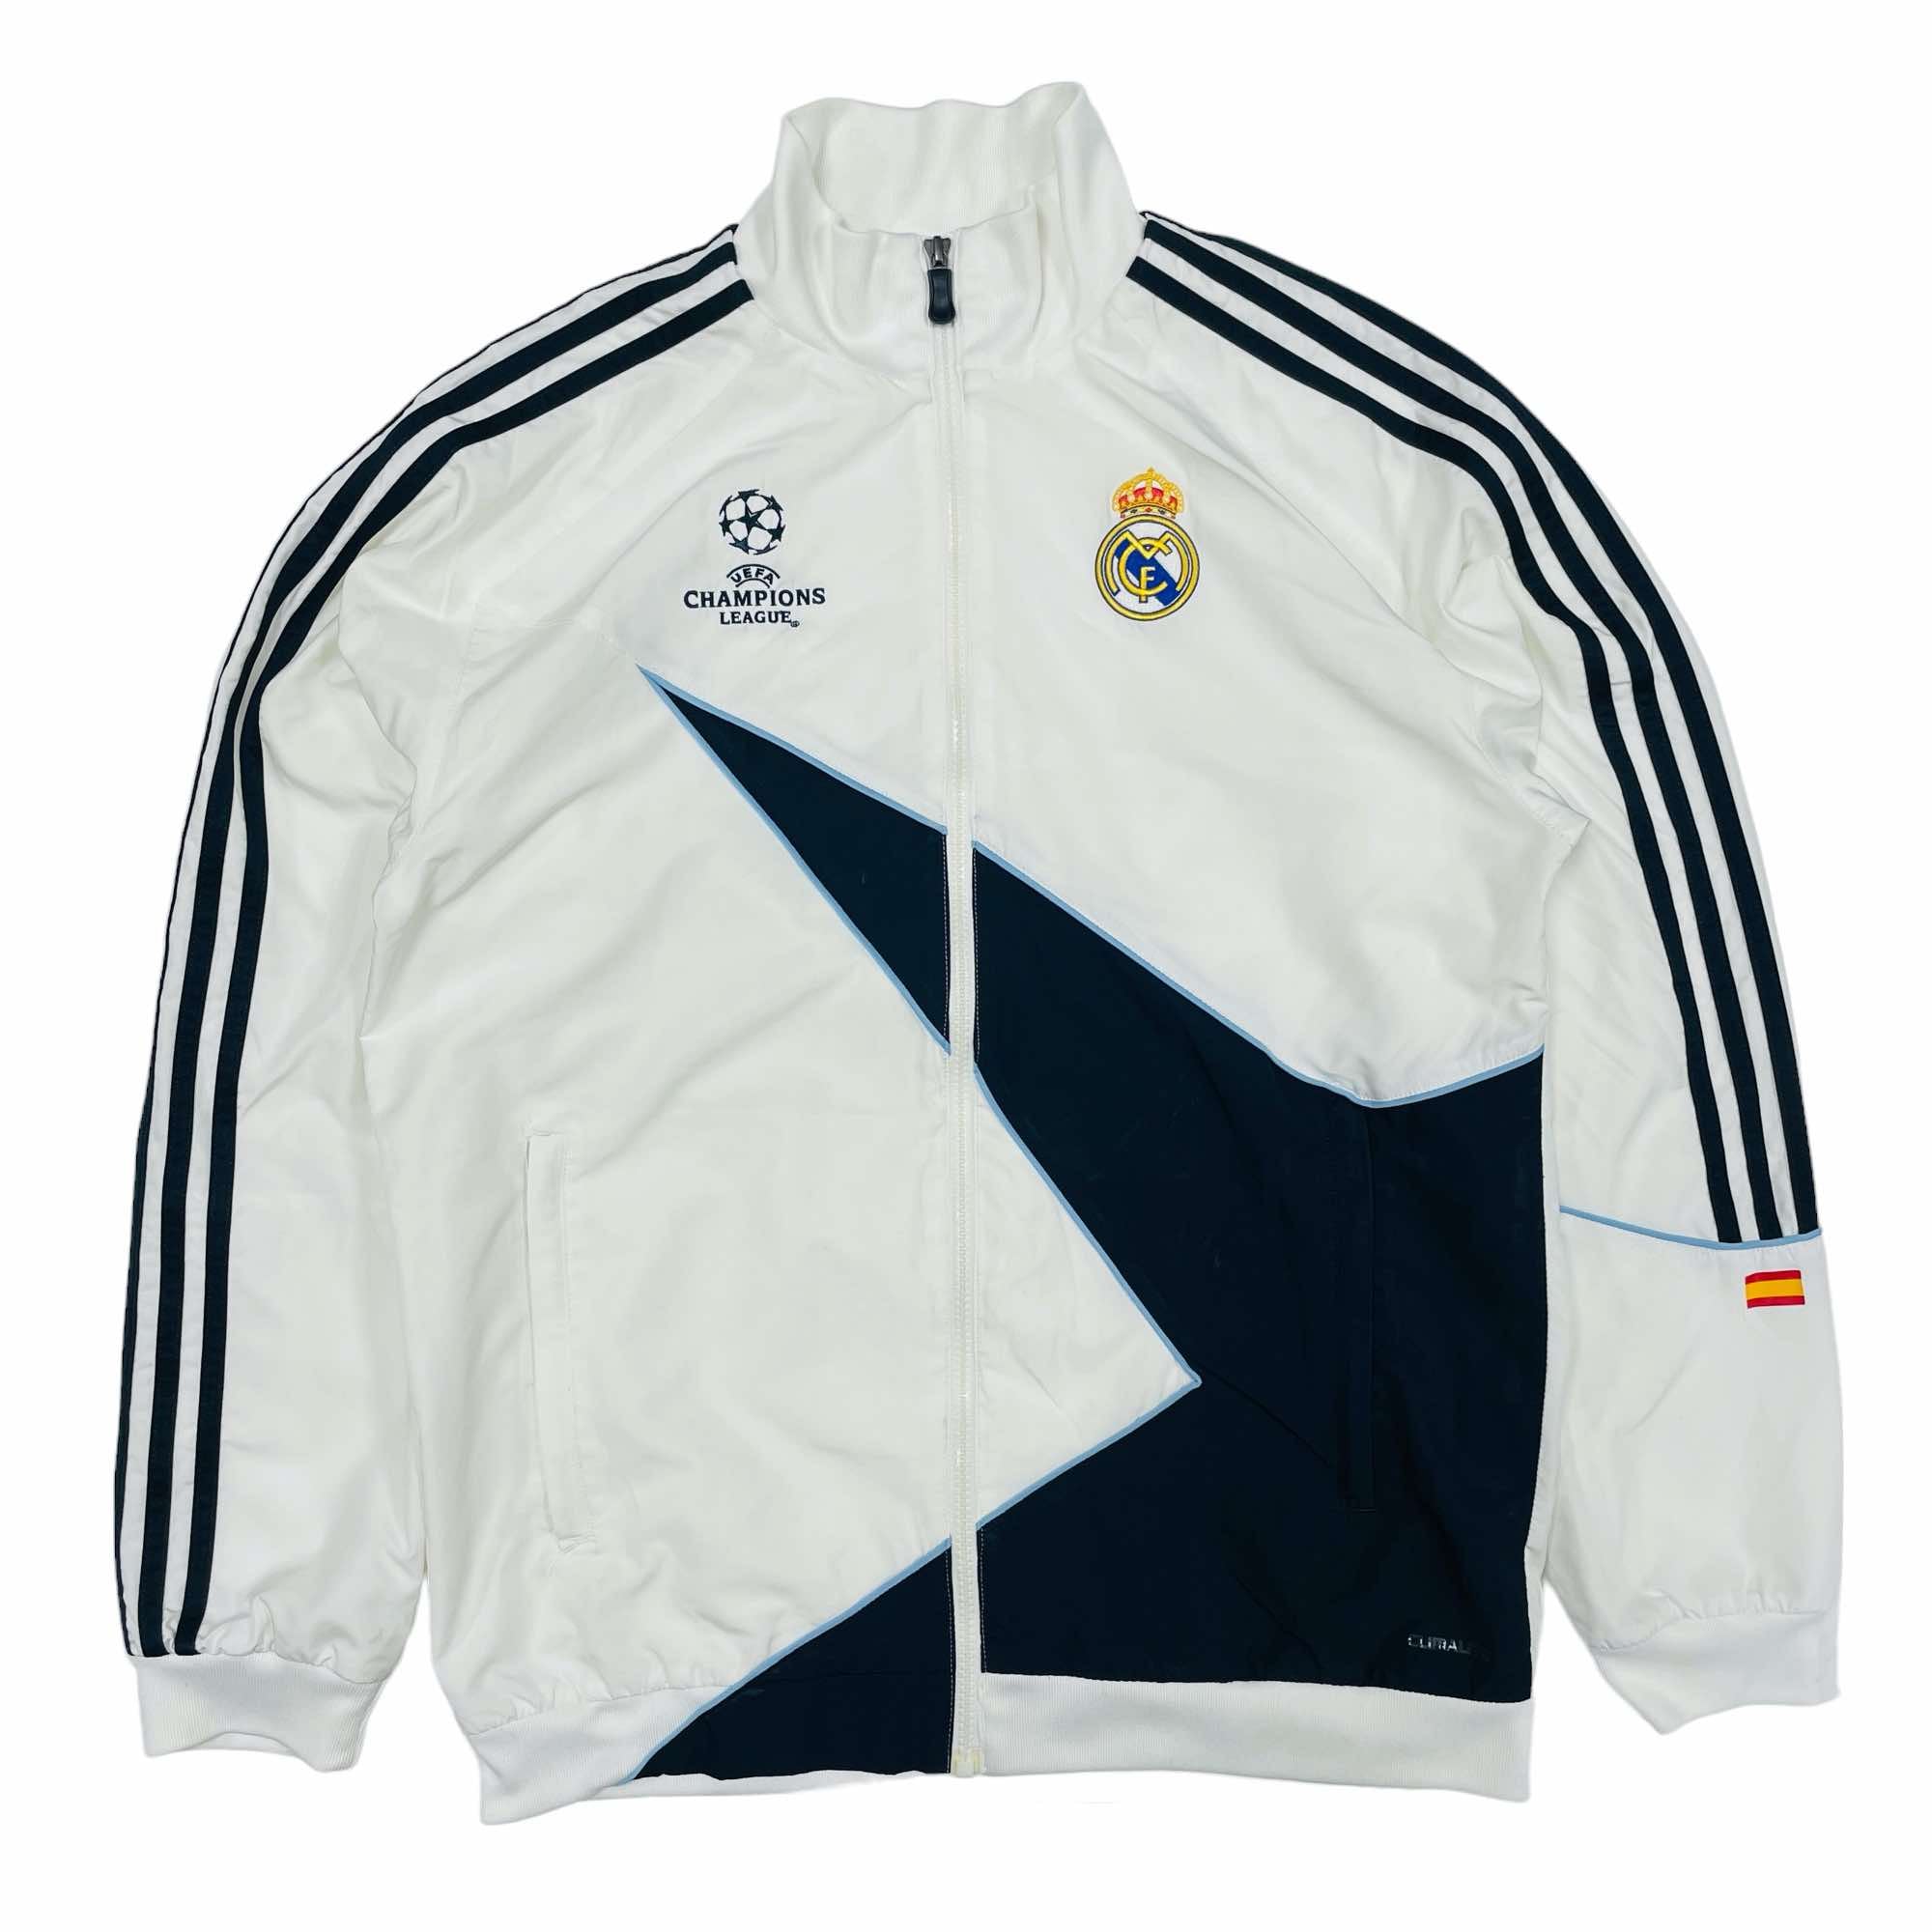 Real Madrid 2009/10 Adidas Champions League Training Jacket - Small